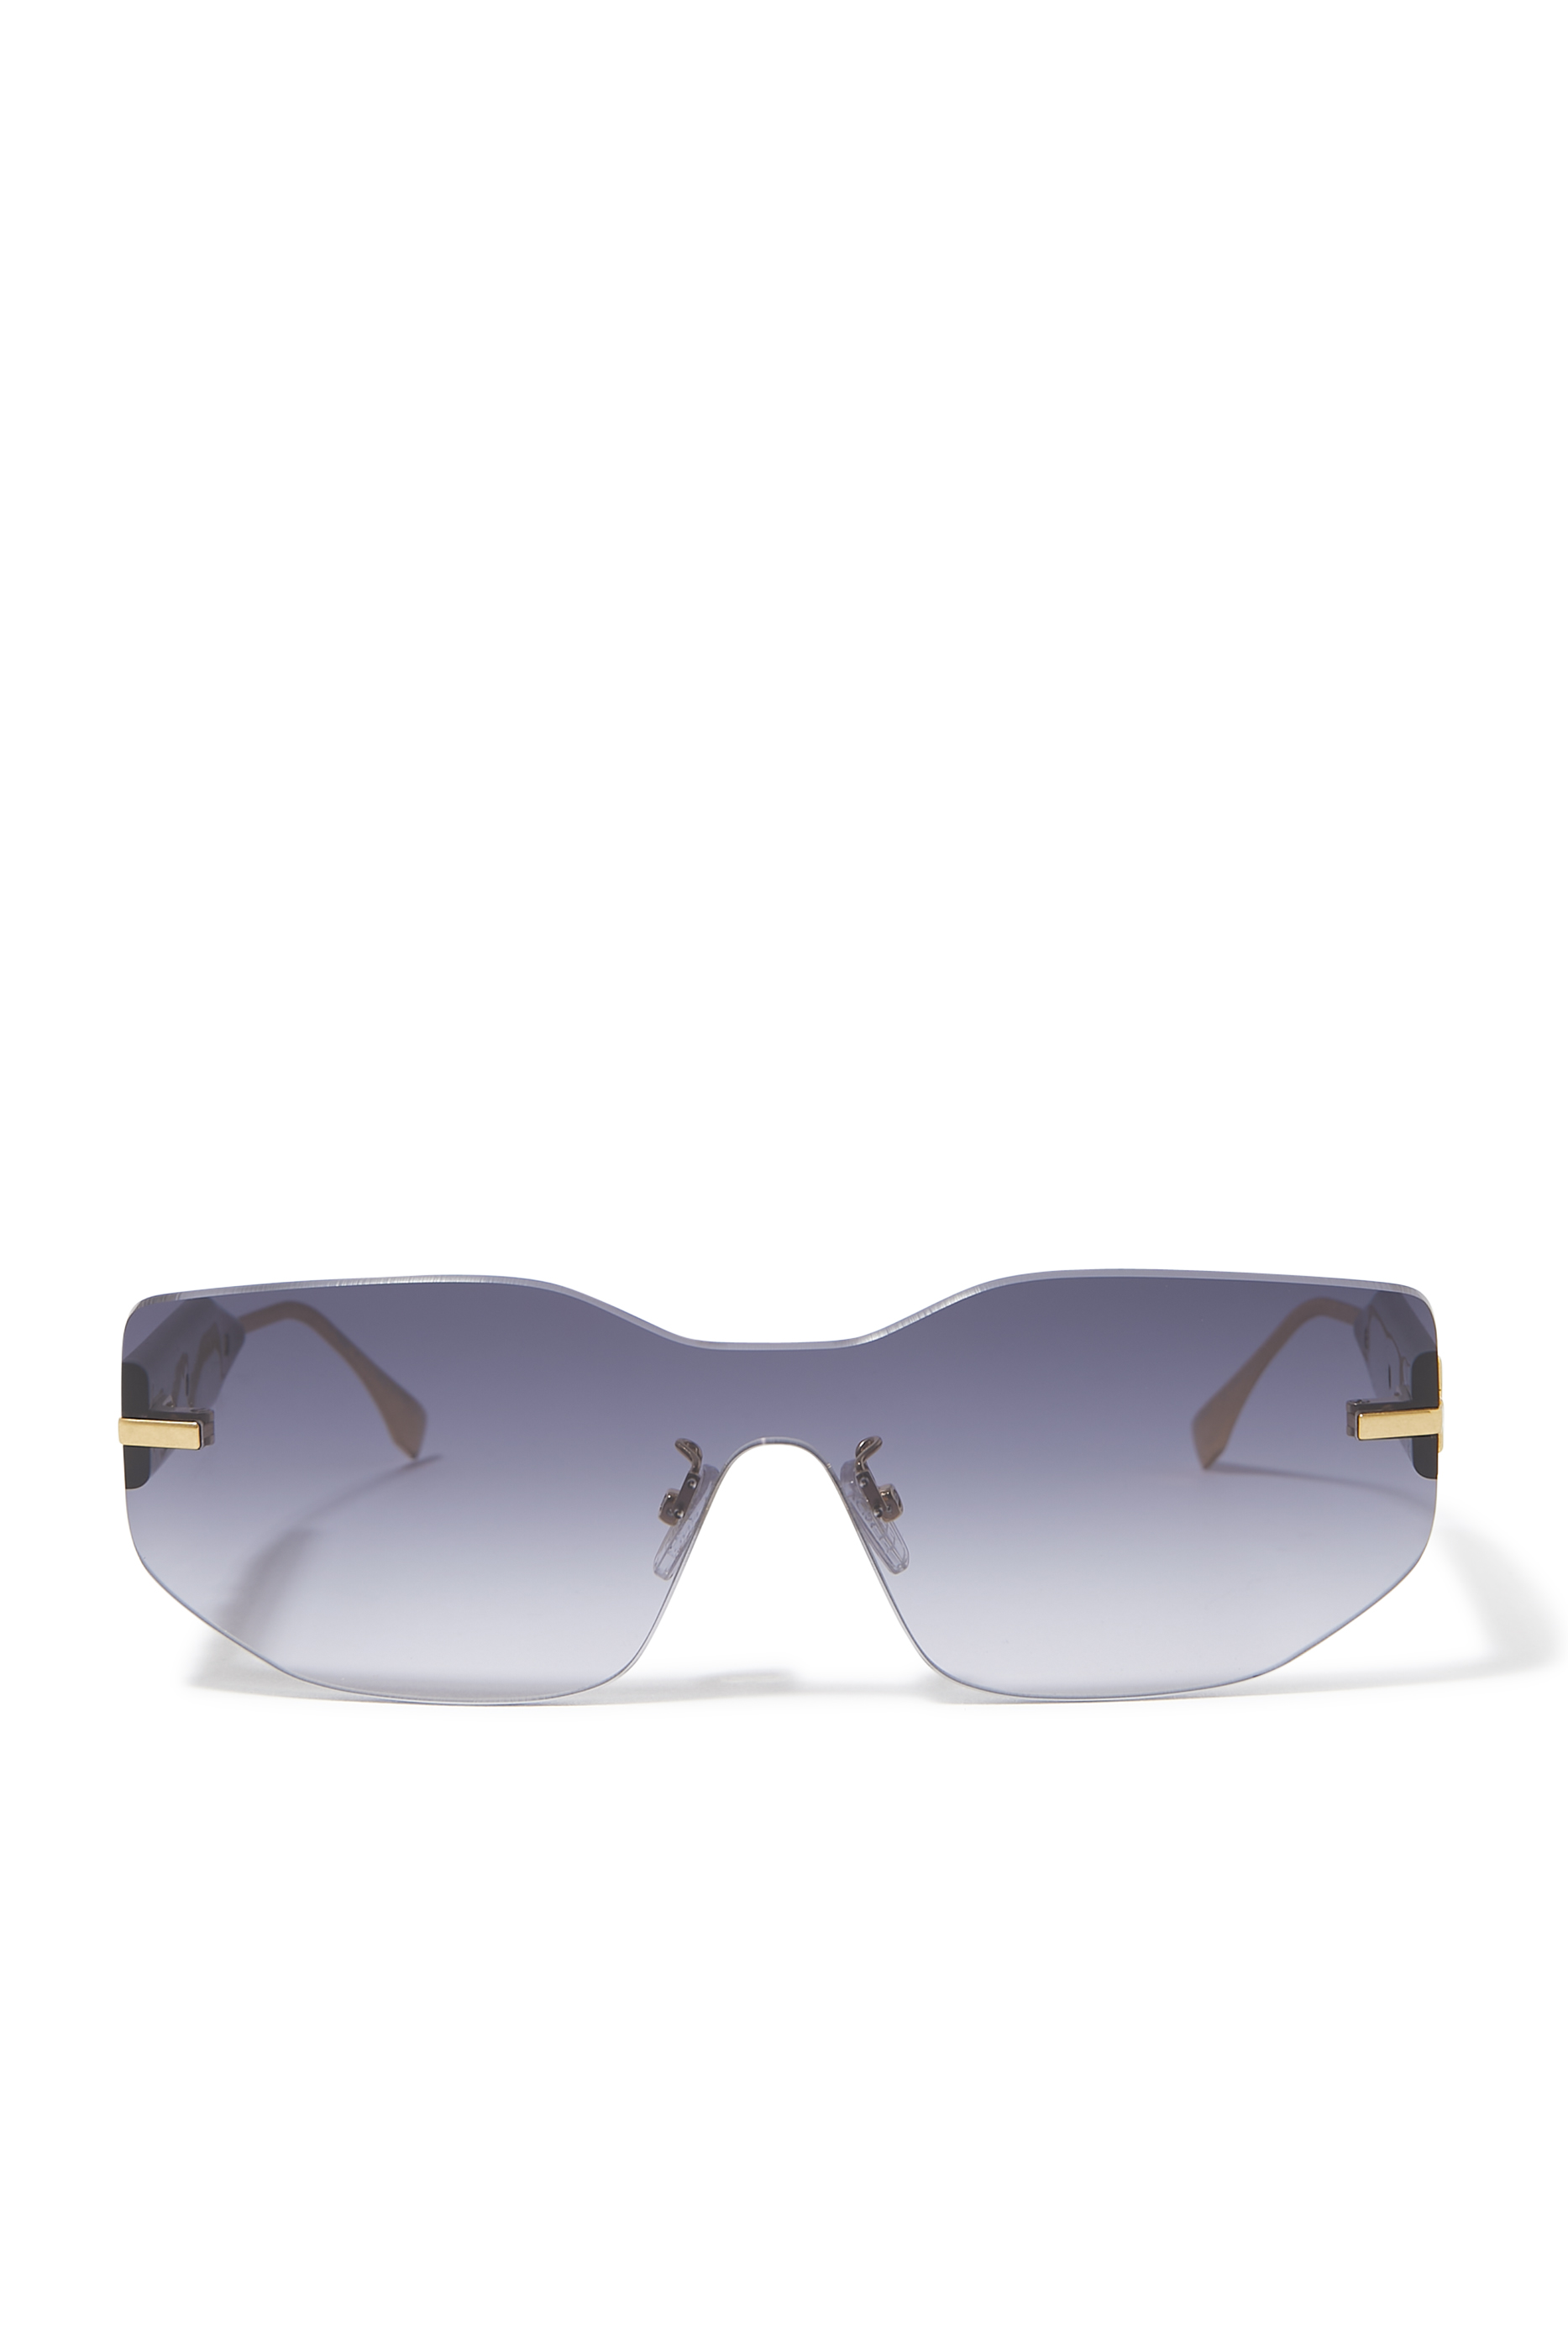 FENDI, Fendigraphy Logo Acetate Rectangular Frame Sunglasses, BLUE, Women